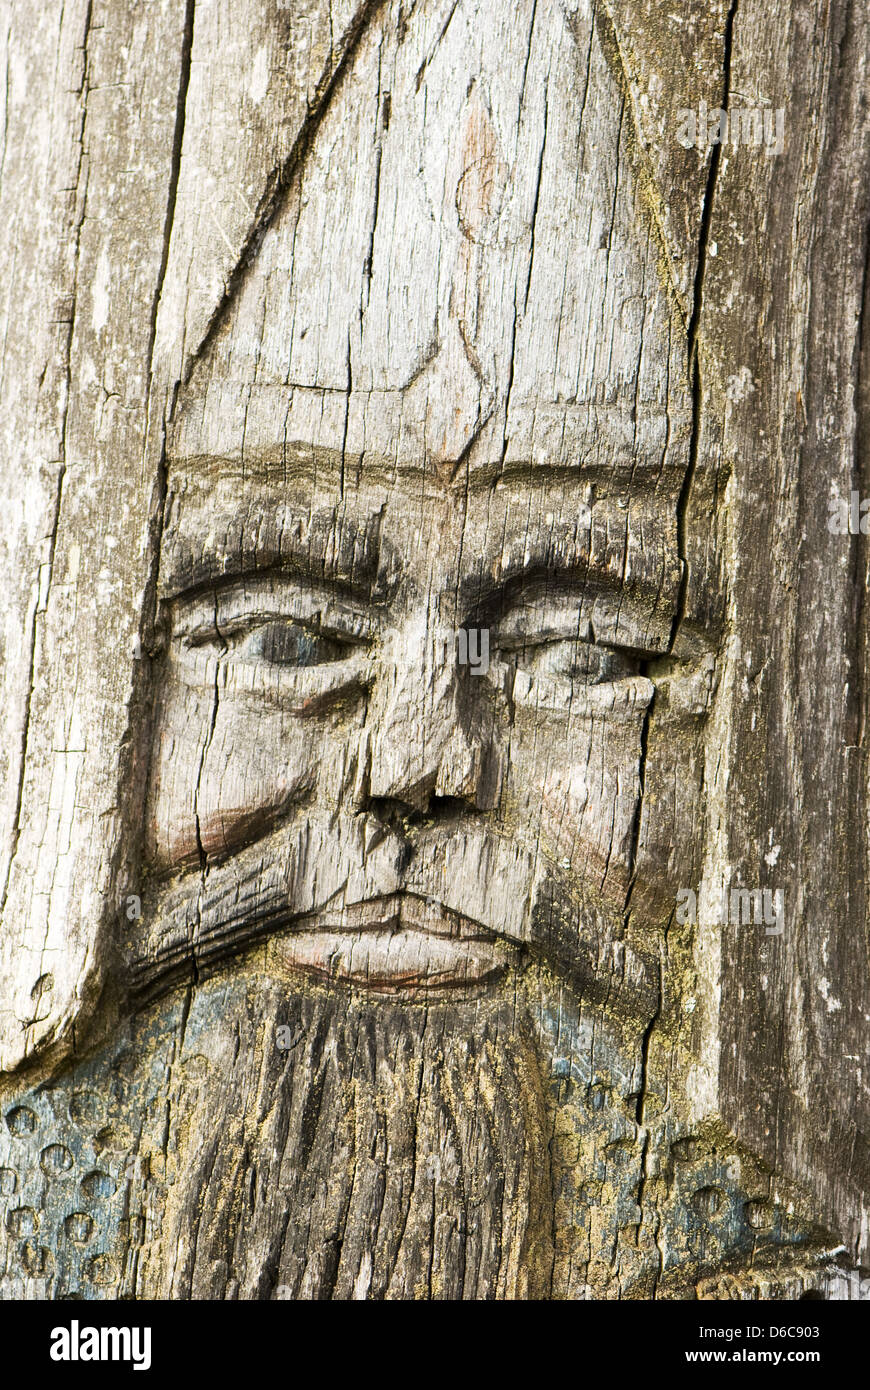 Cara del héroe, glíficas en madera Foto de stock